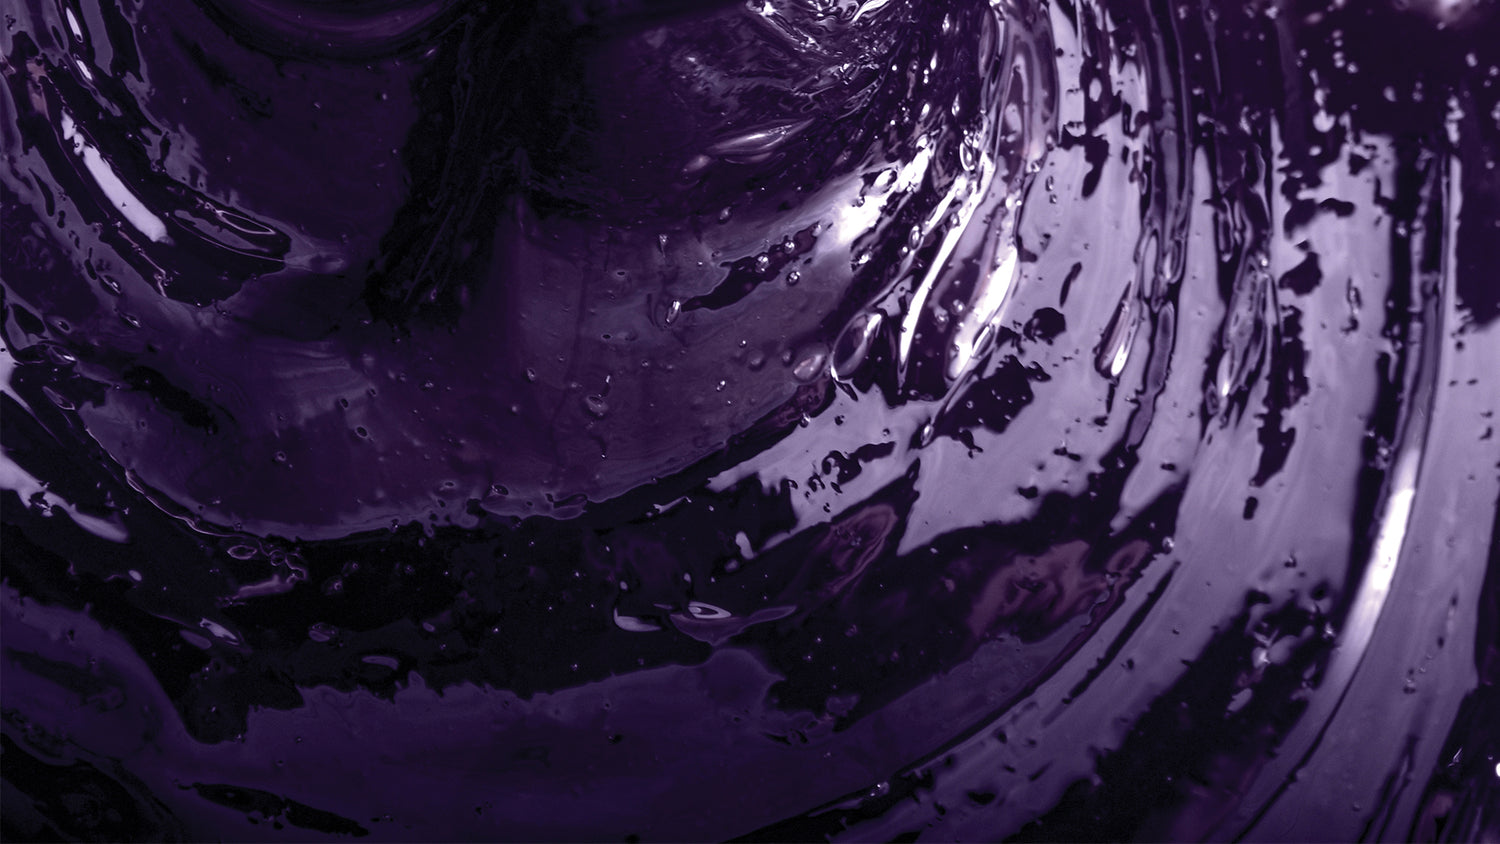 Shiny, purple Wax, called Comfort Wax, is shown